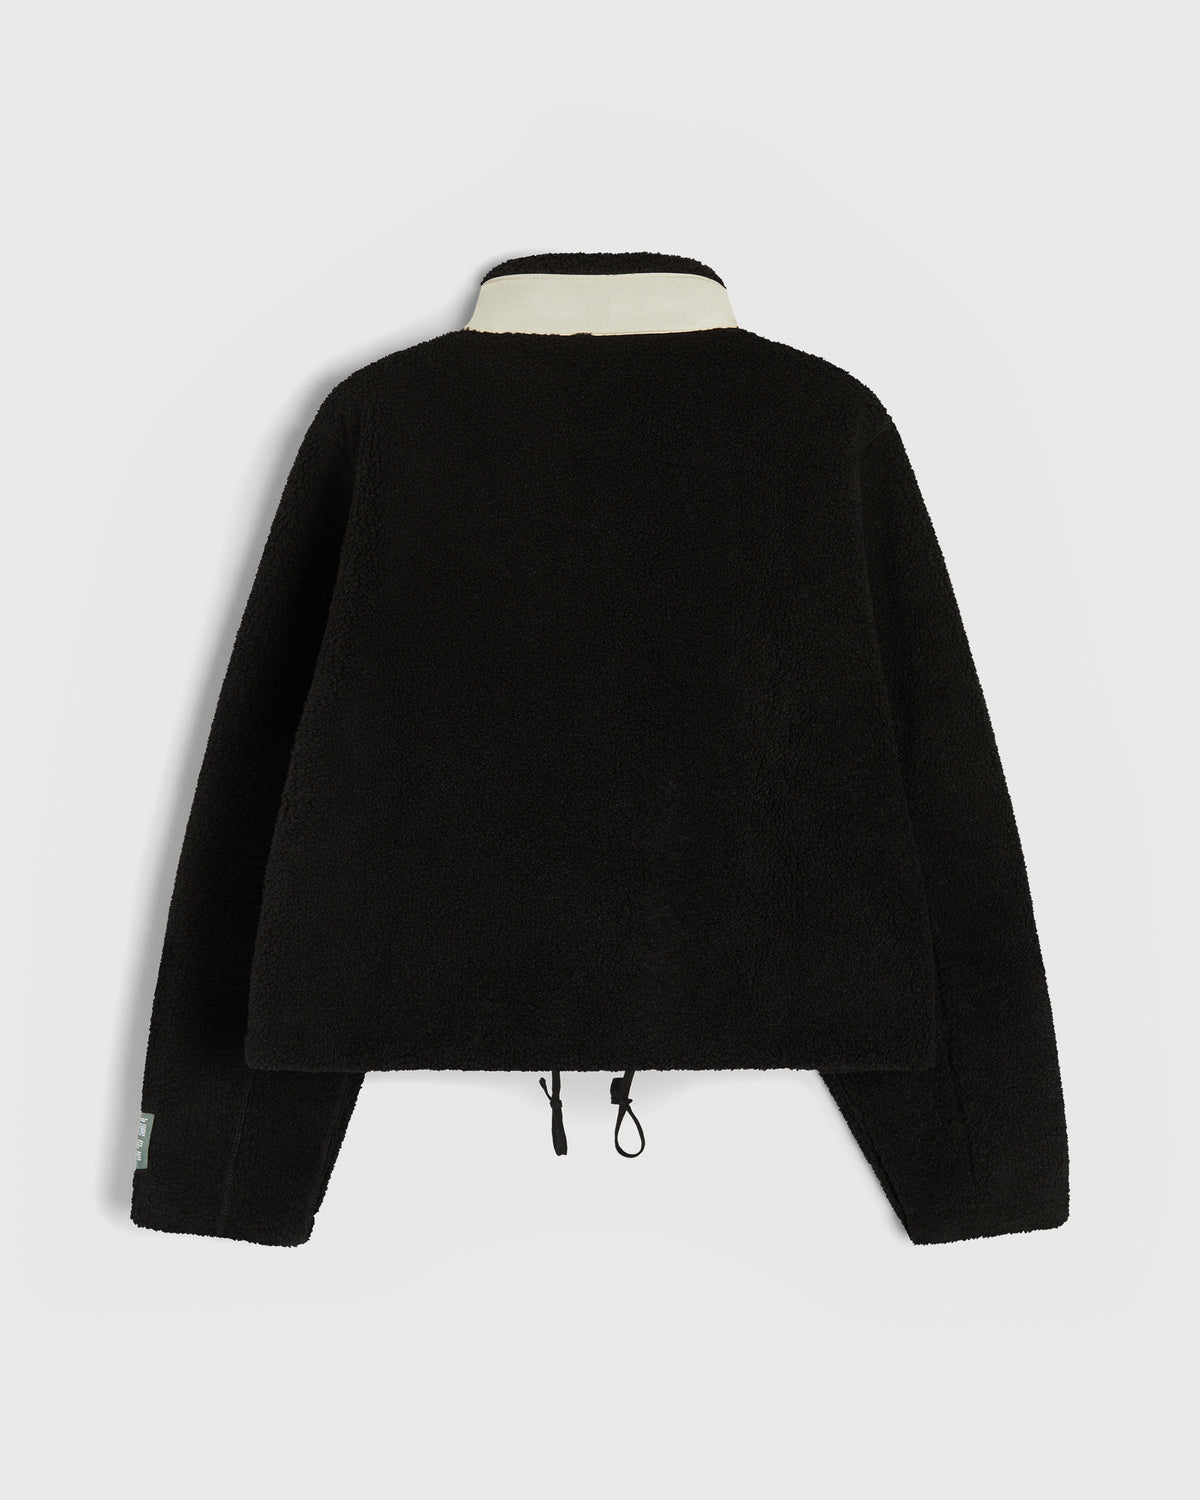 Modular Pocket Sherpa Fleece in Black